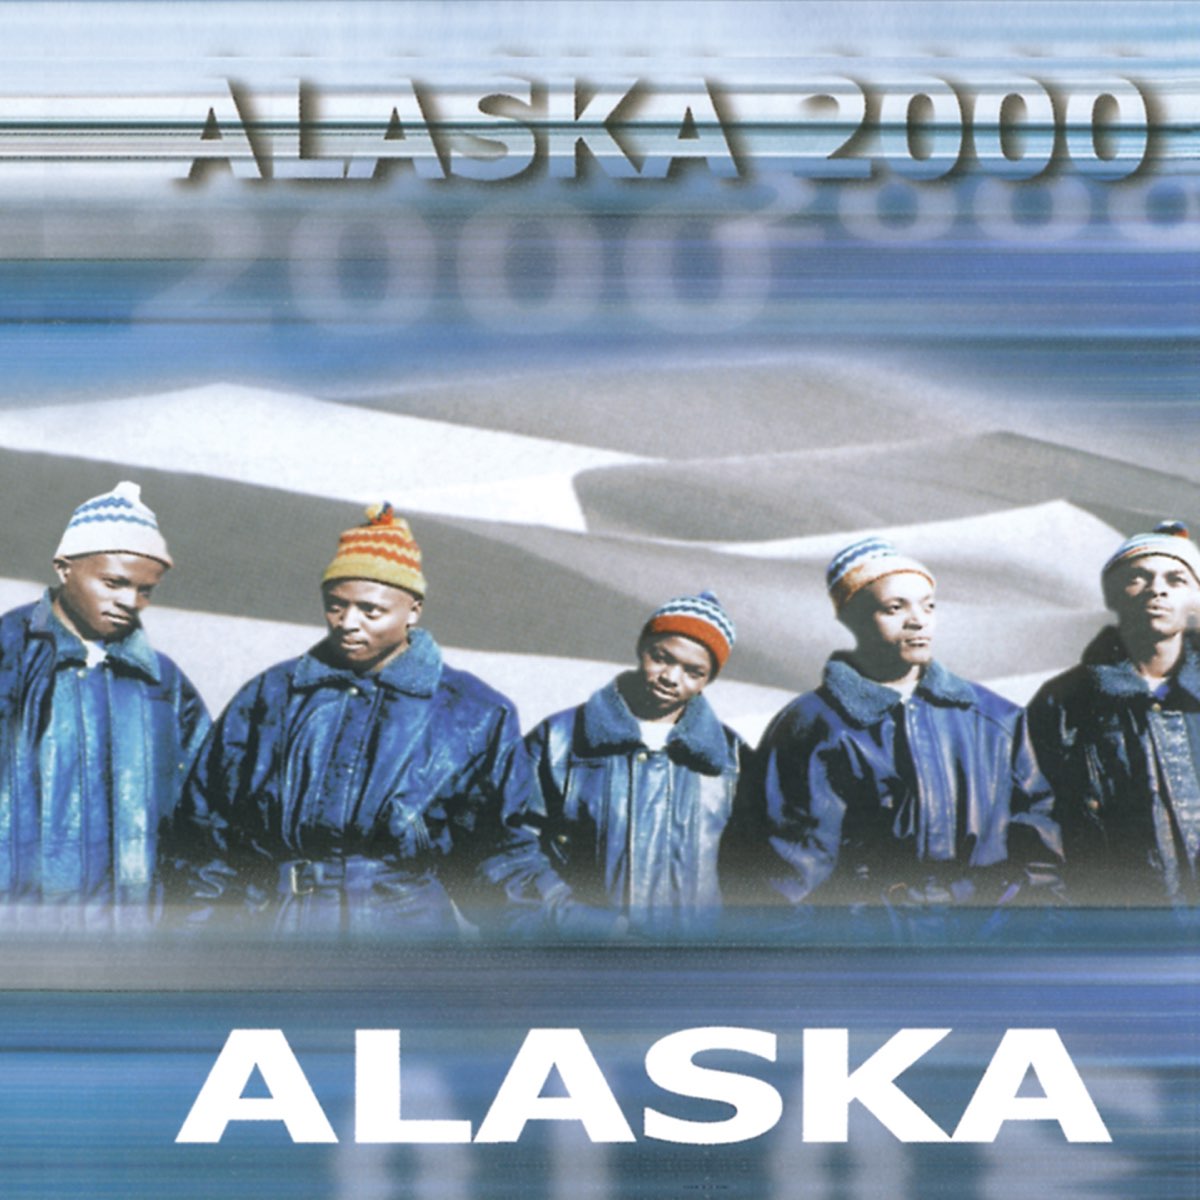 ‎Alaska 2000 - Album by Alaska - Apple Music